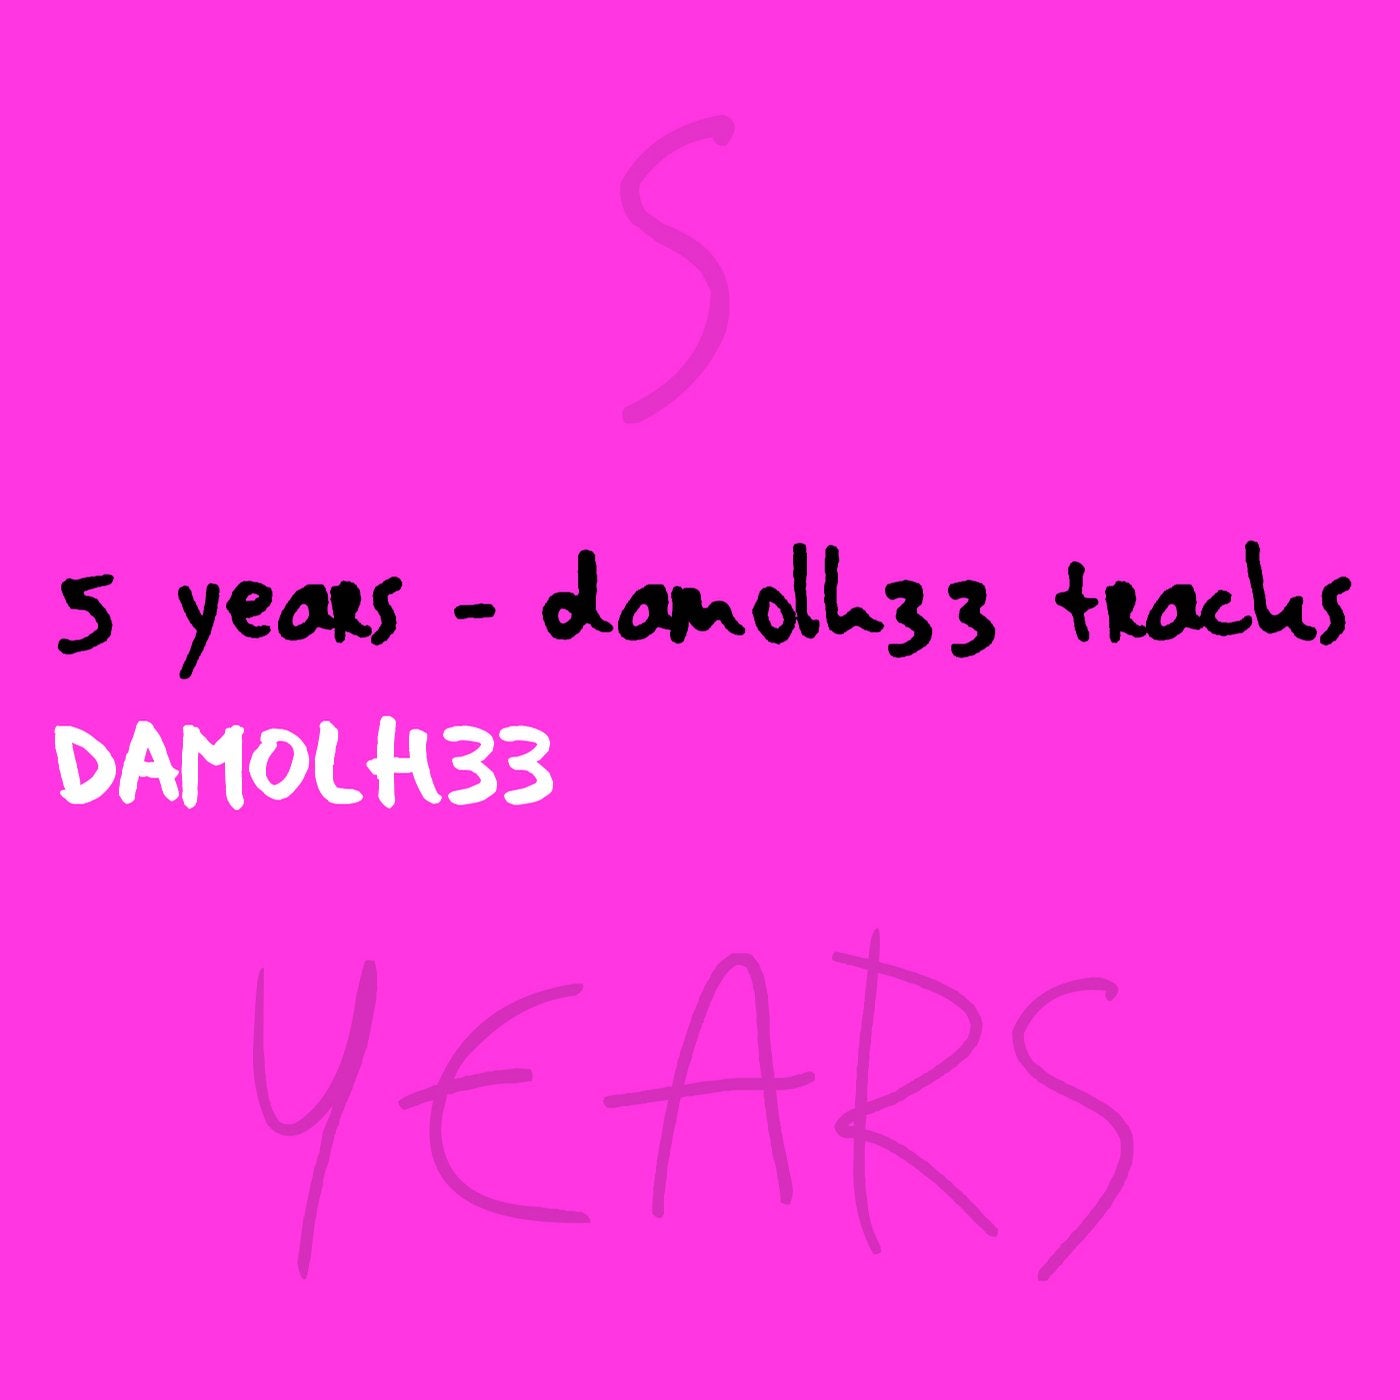 5 Years - Damolh33 Tracks